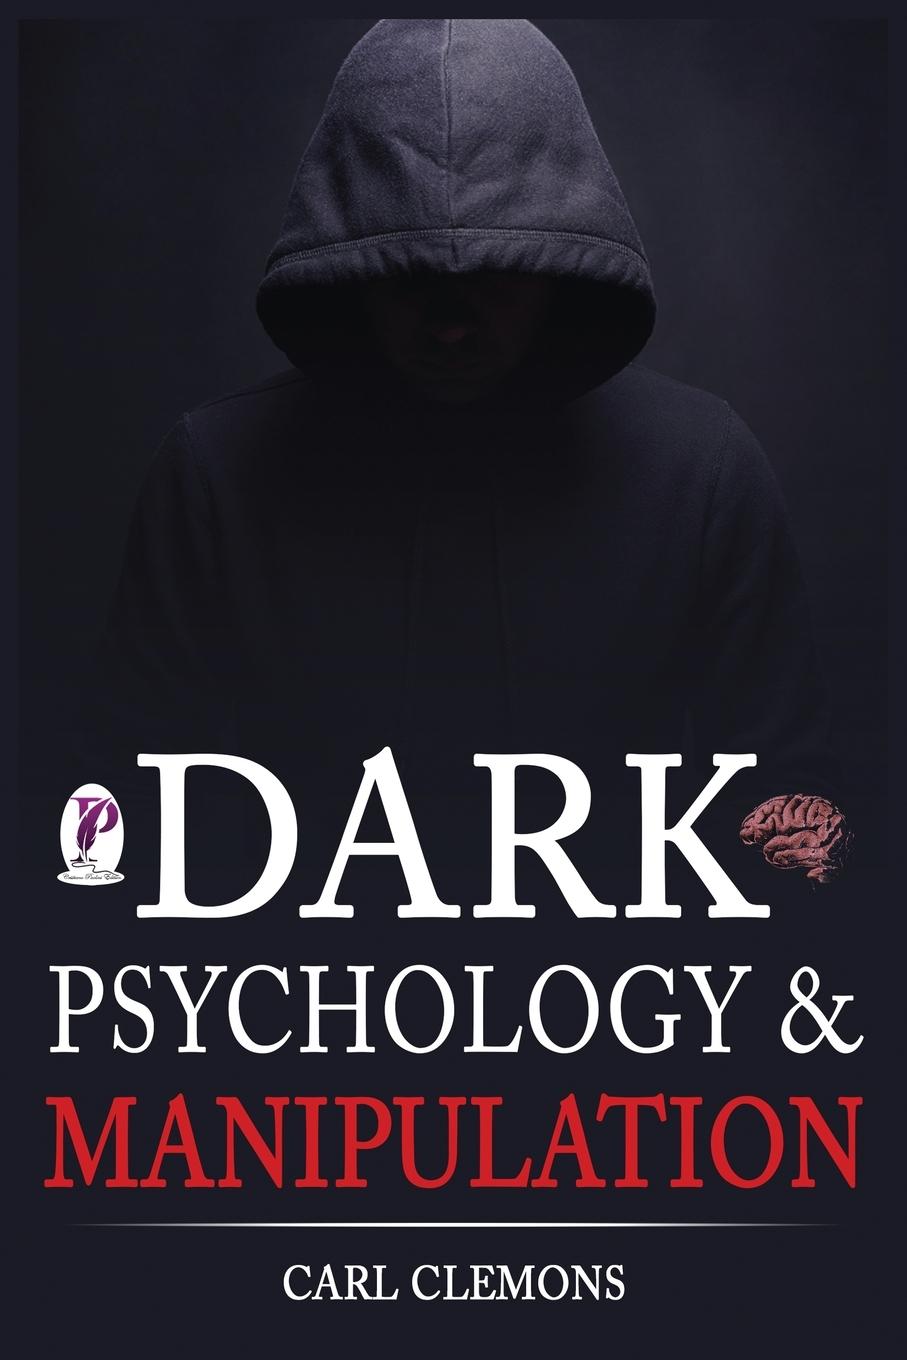 Book Dark Psychology & Manipulation Carl Clemons